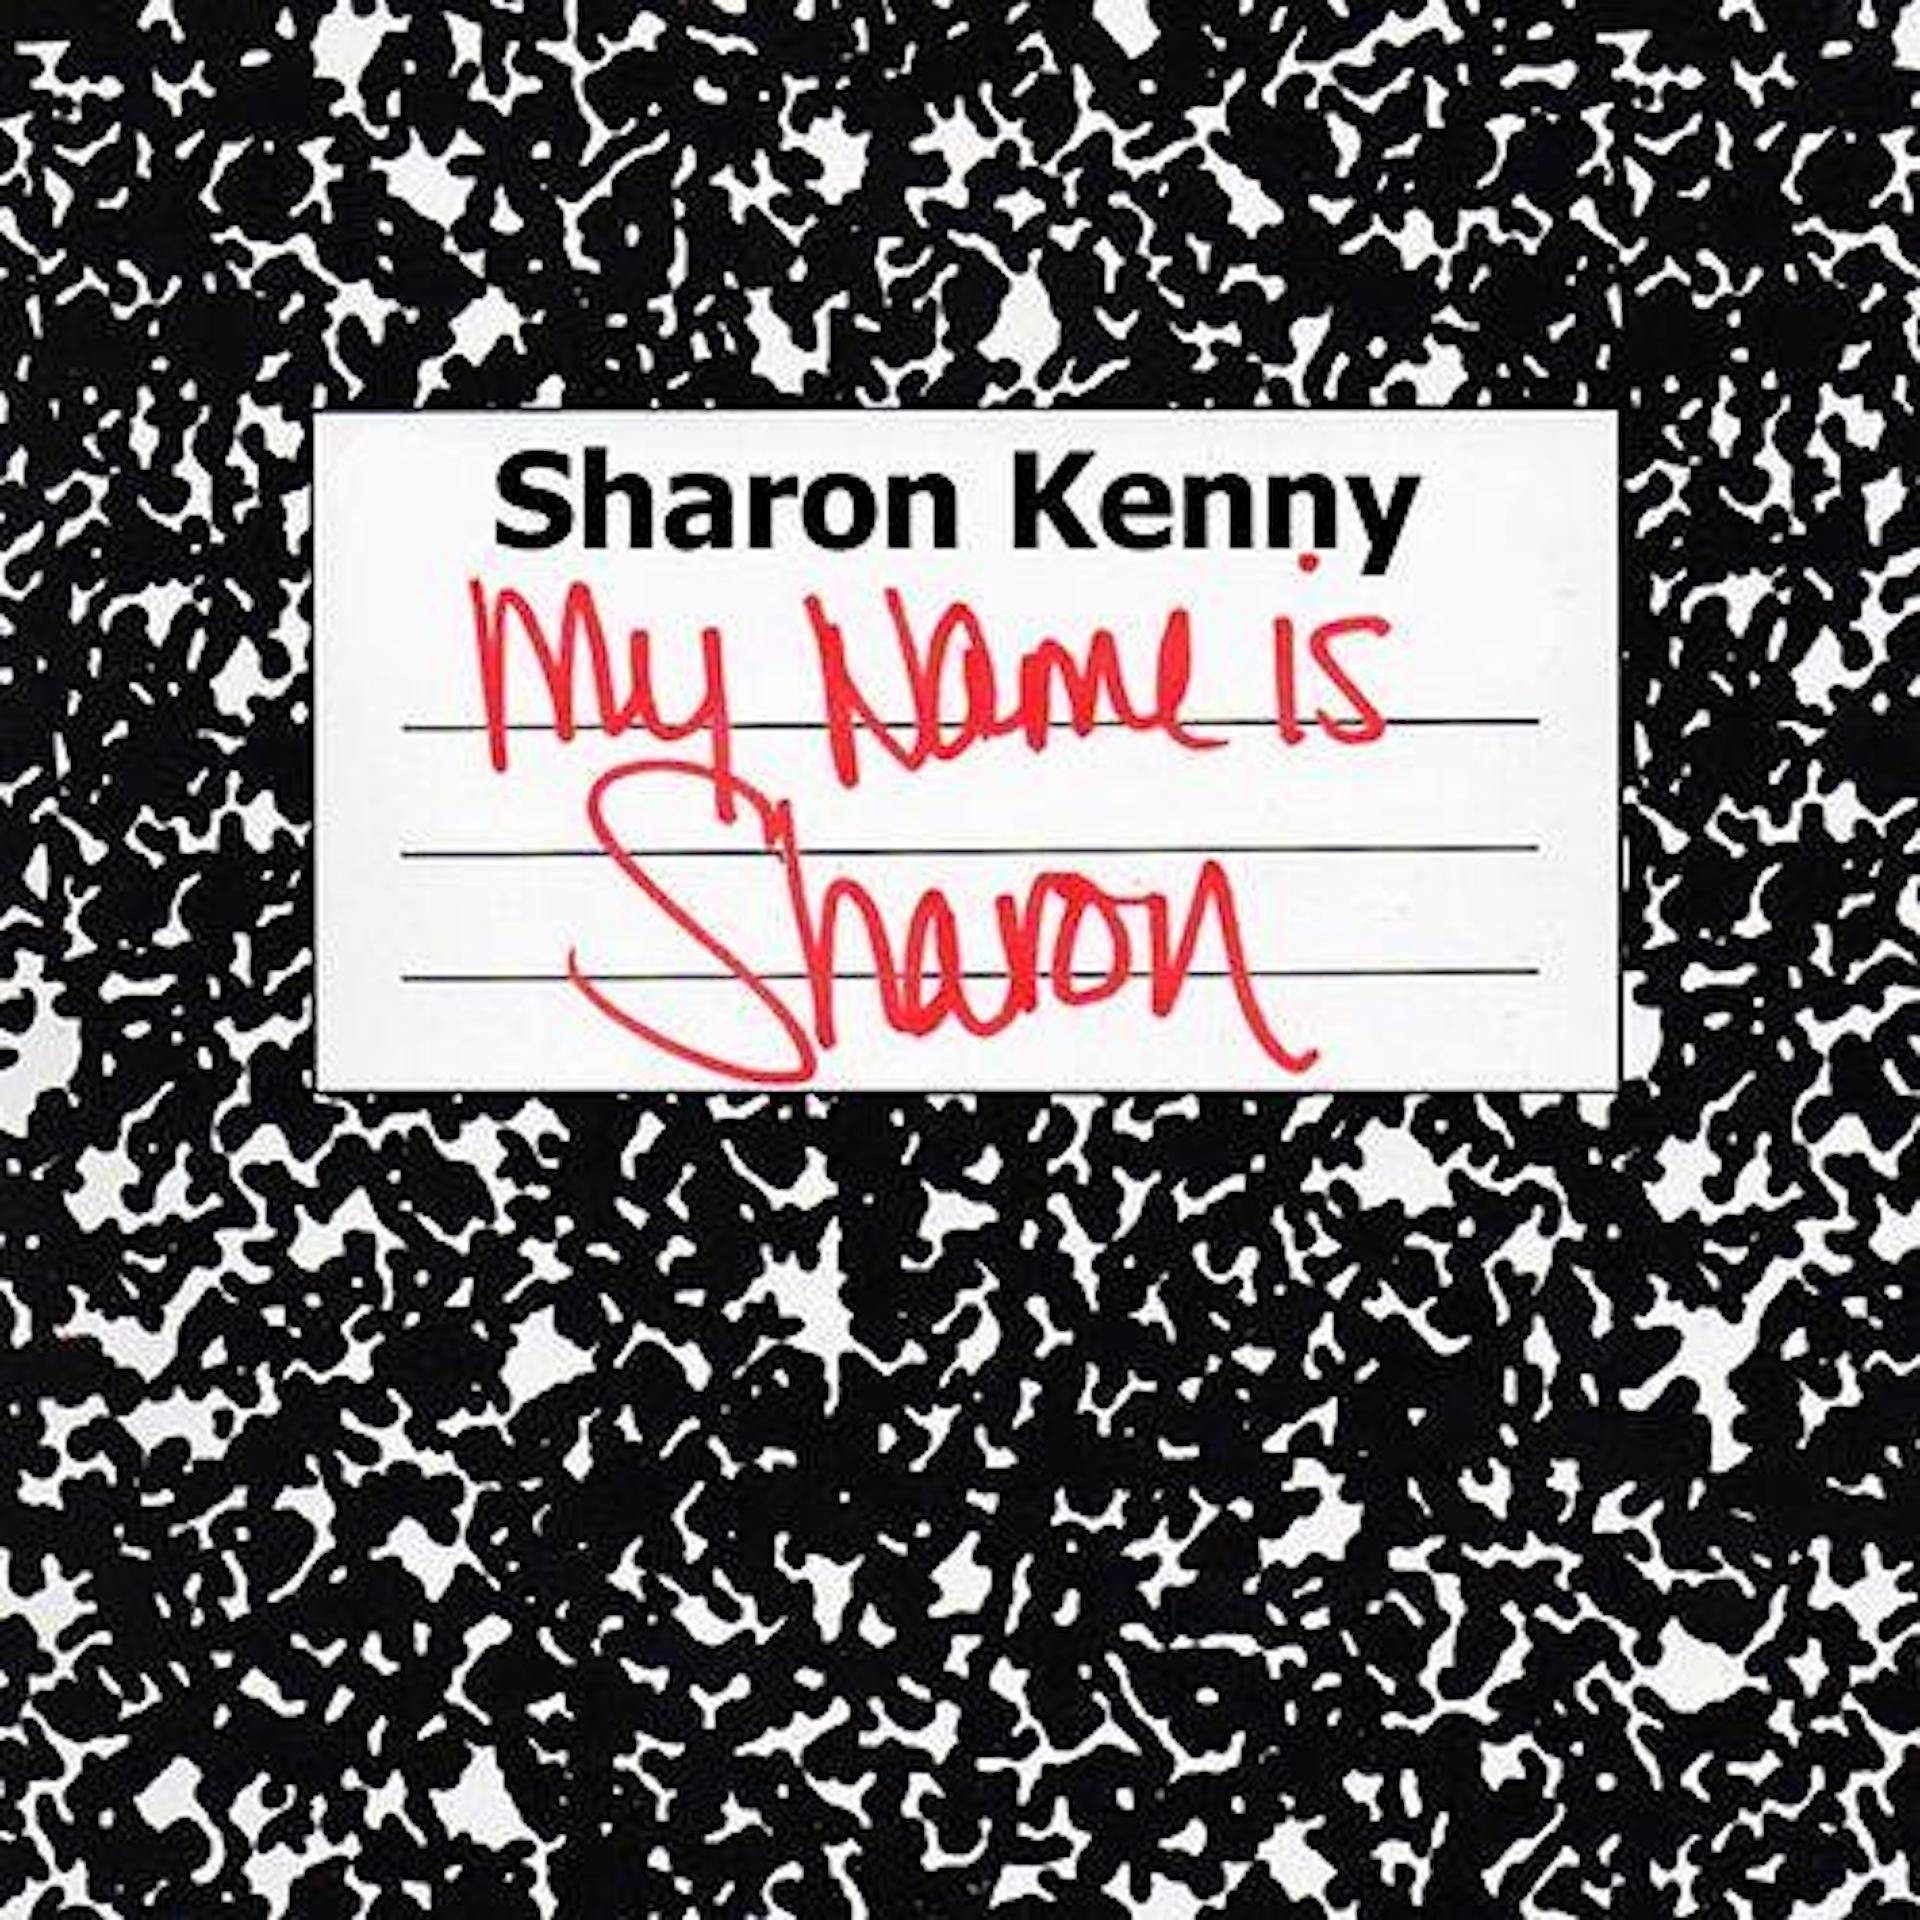 SHARON KENNY MY NAME IS SHARON.jpg